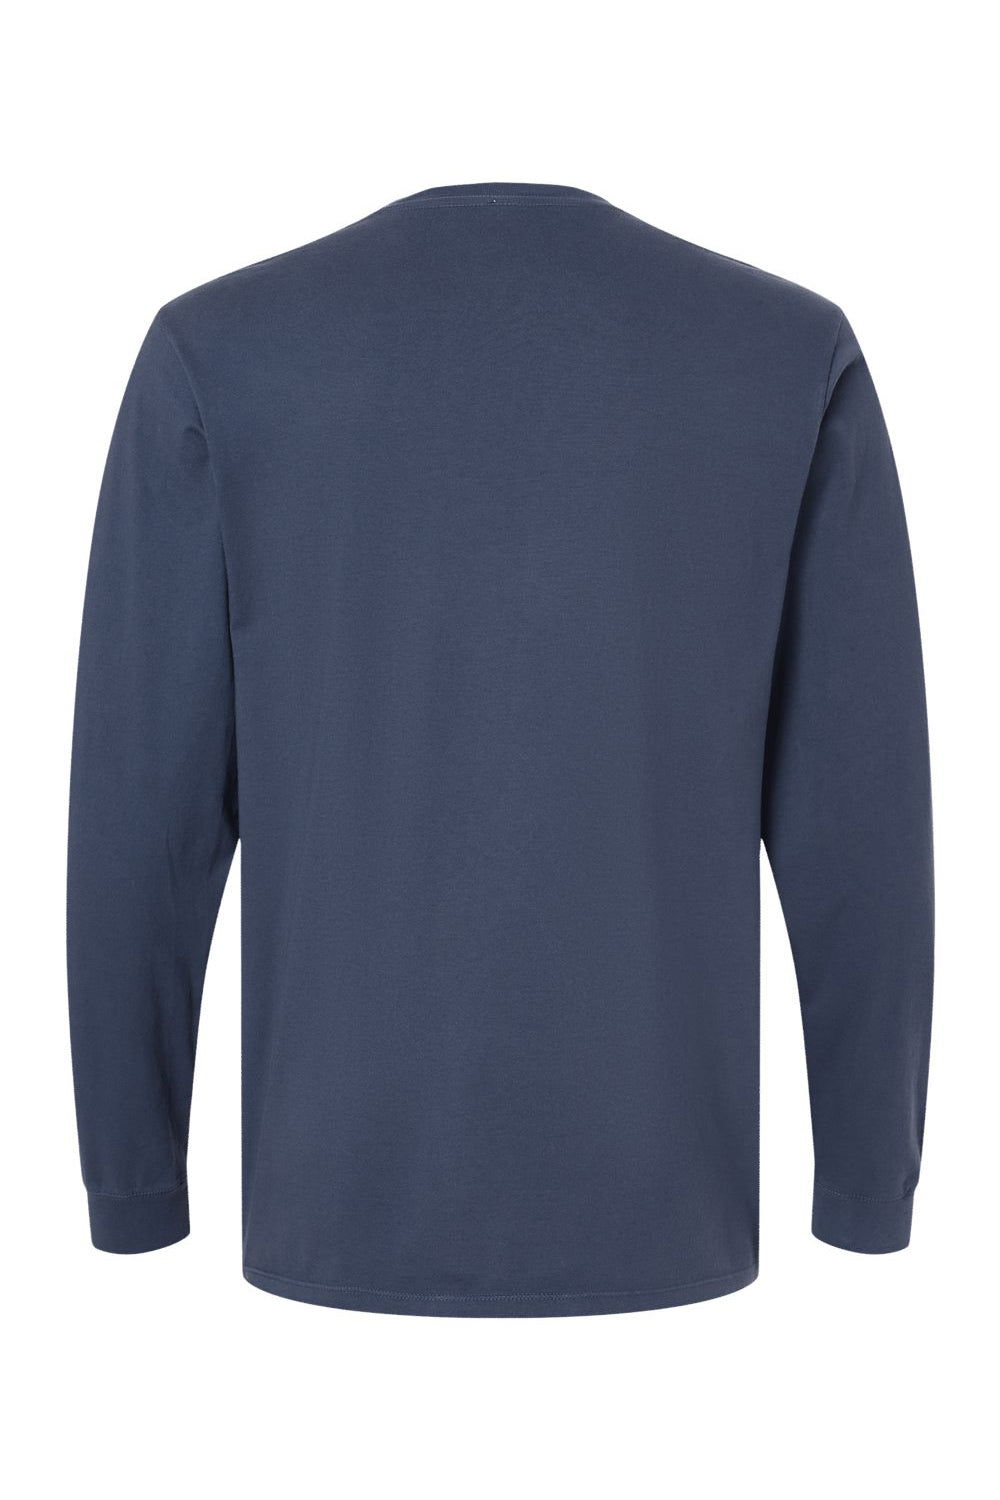 SoftShirts 420 Mens Organic Long Sleeve Crewneck T-Shirt Navy Blue Flat Back